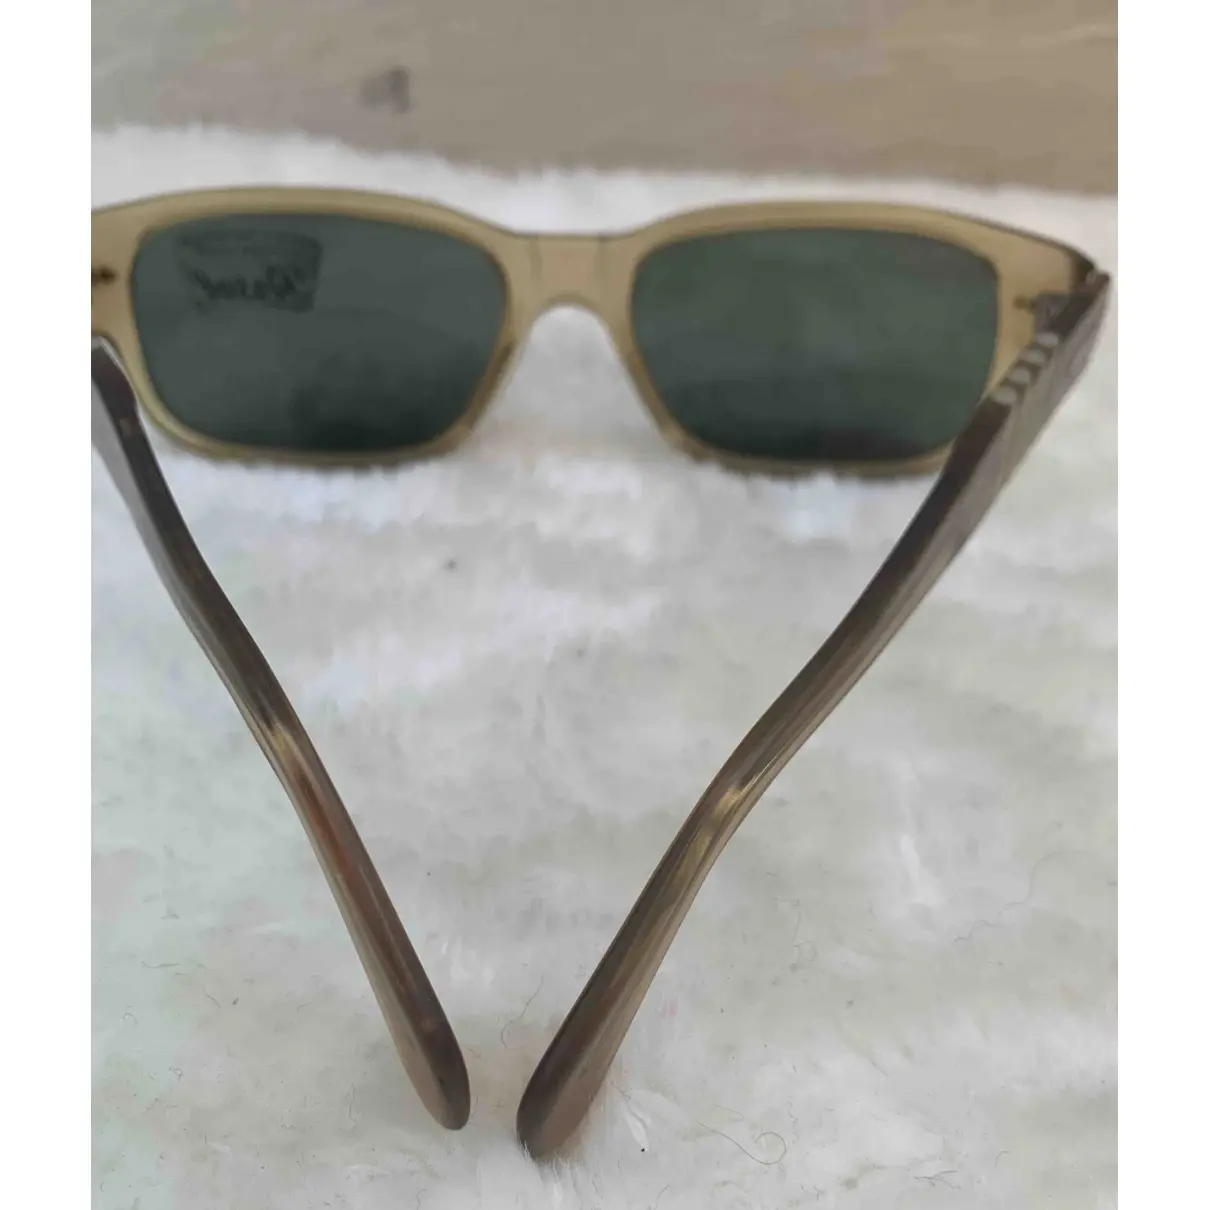 Persol Sunglasses for sale - Vintage